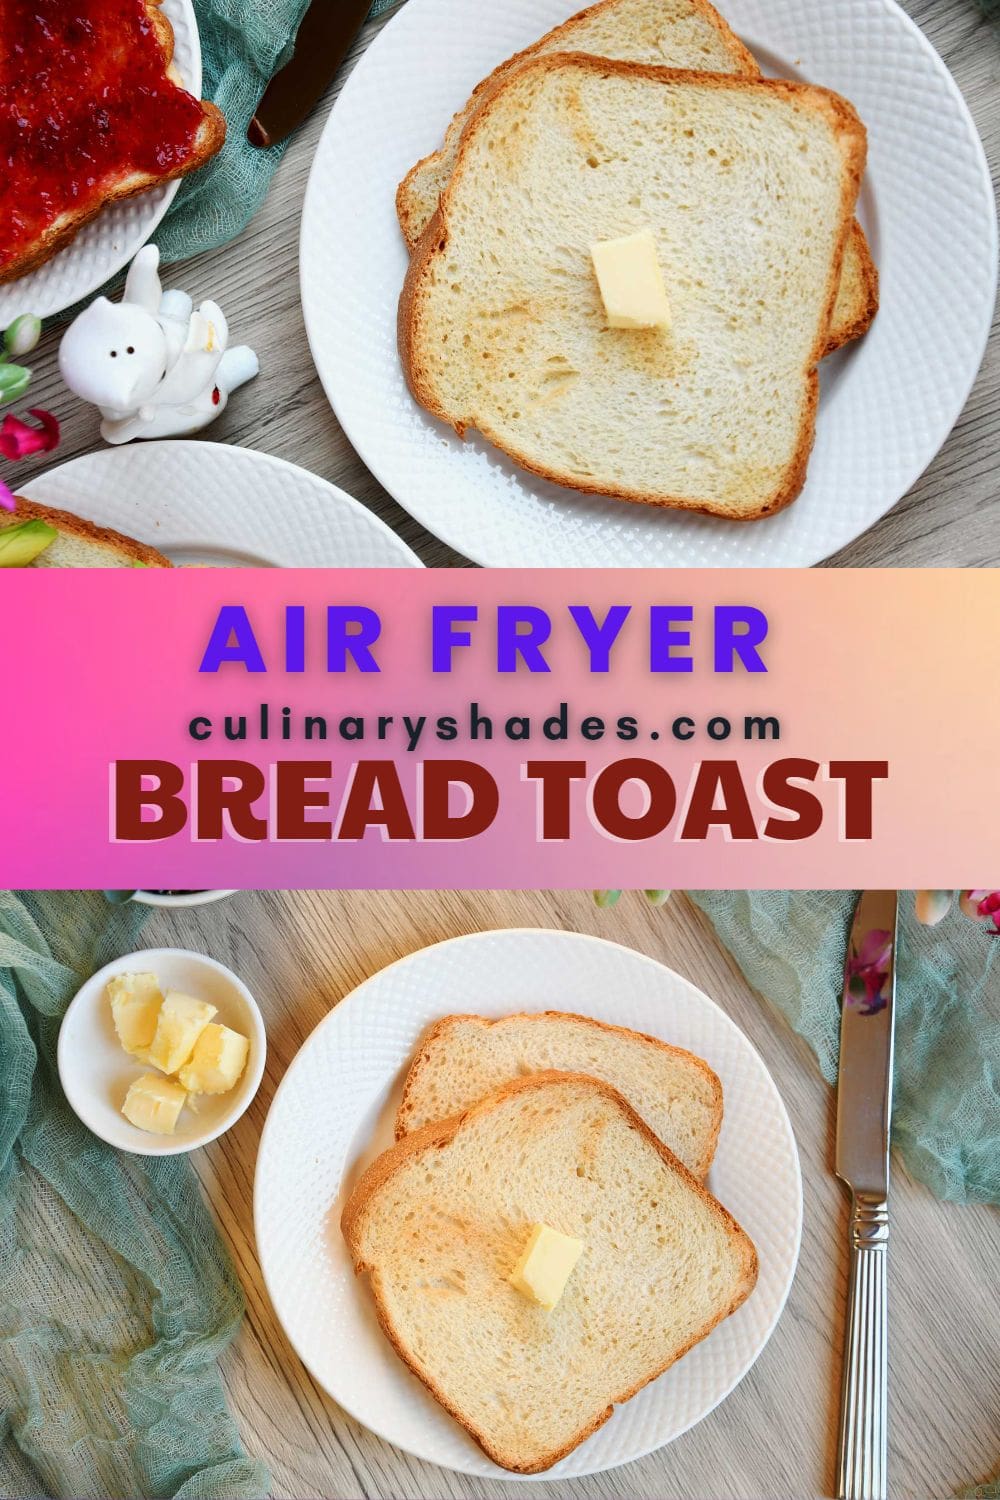 Air fryer bread toast pin.